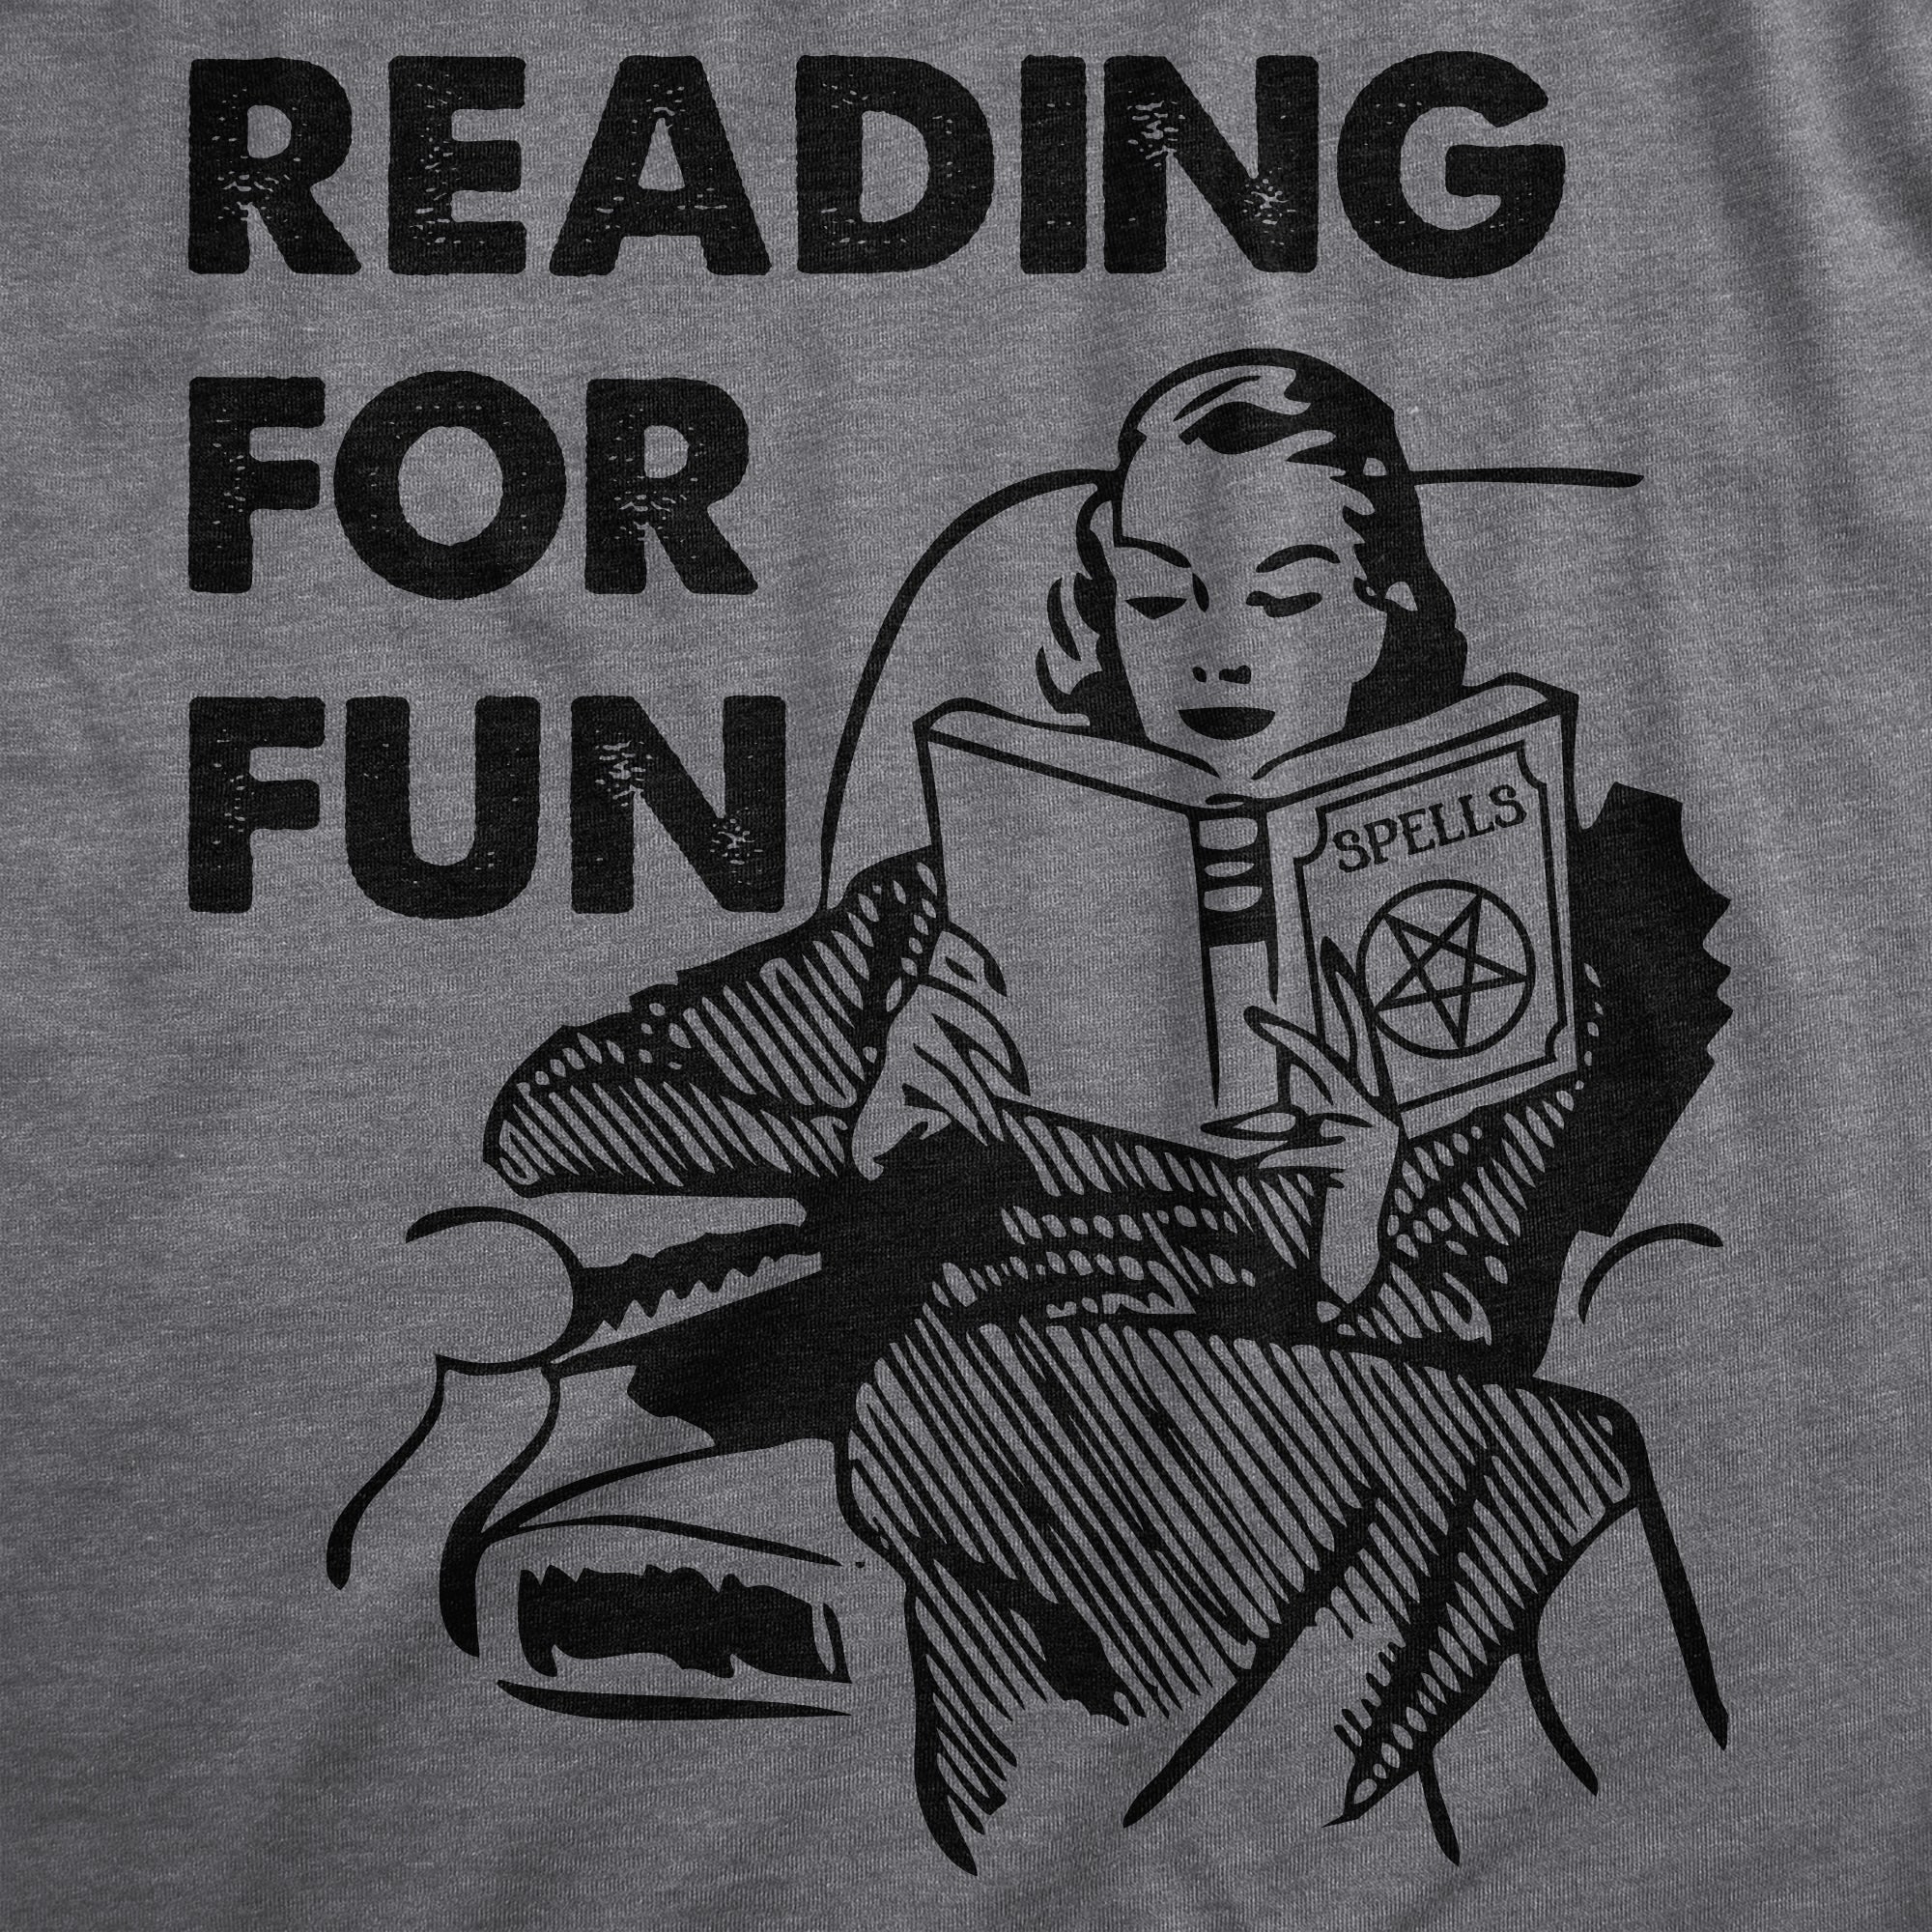 Funny Dark Heather Grey - READING Reading For Fun Womens T Shirt Nerdy nerdy sarcastic Tee